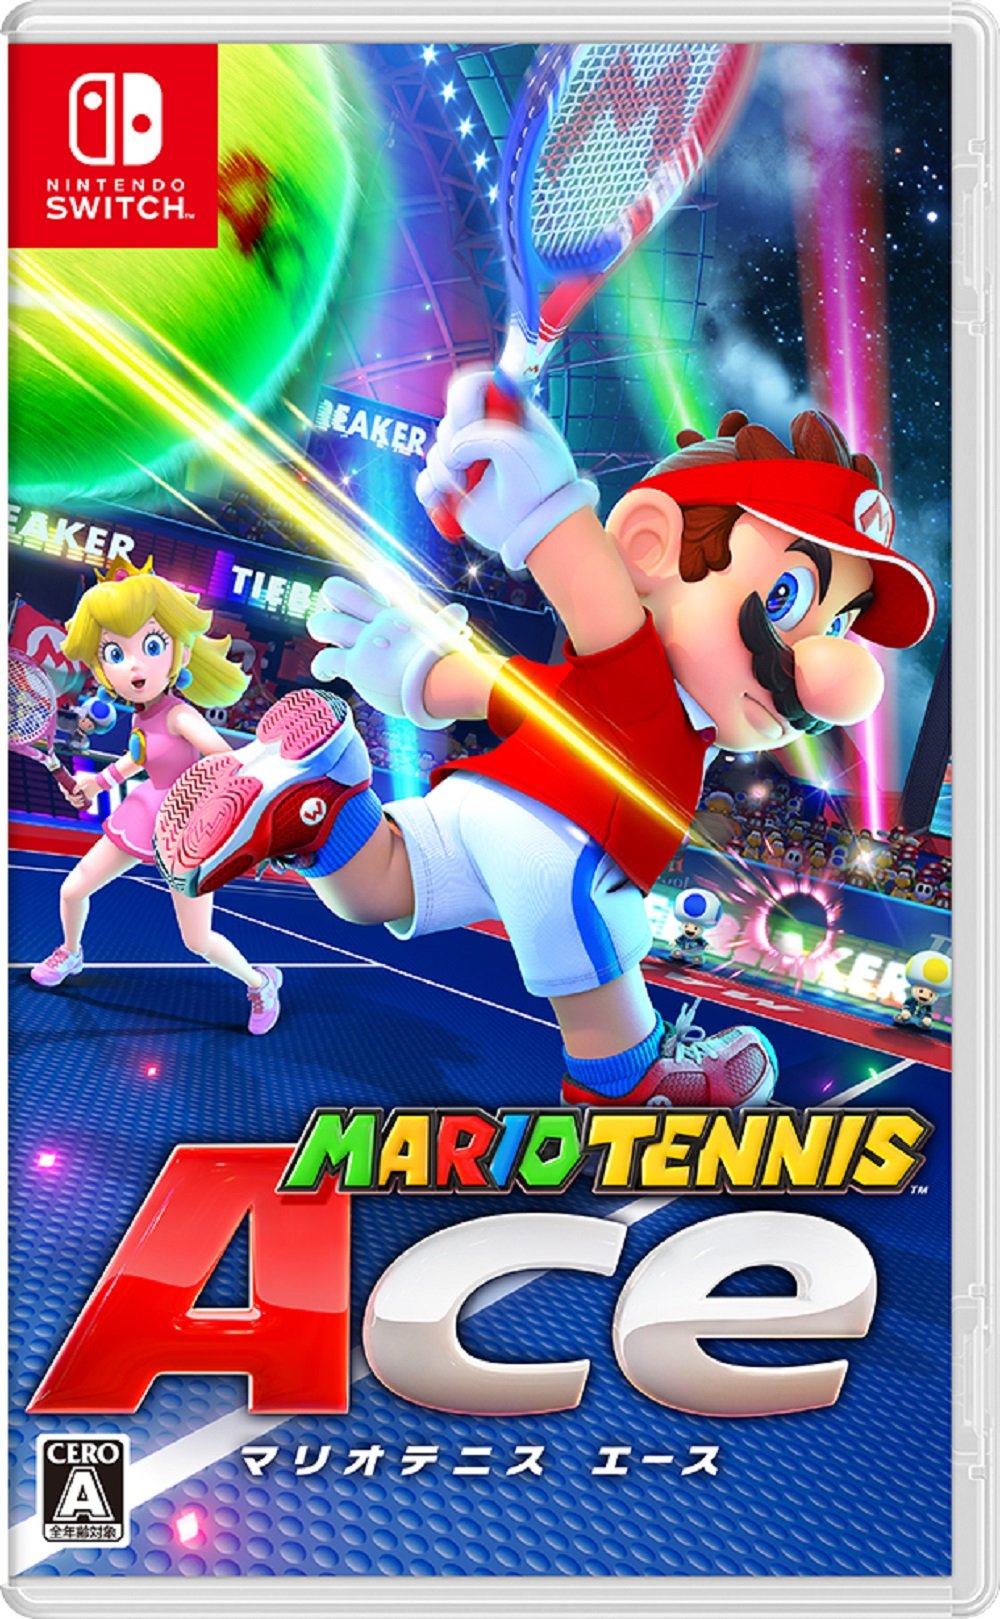 Nintendo Switch JP - Mario Tennis Aces.jpg